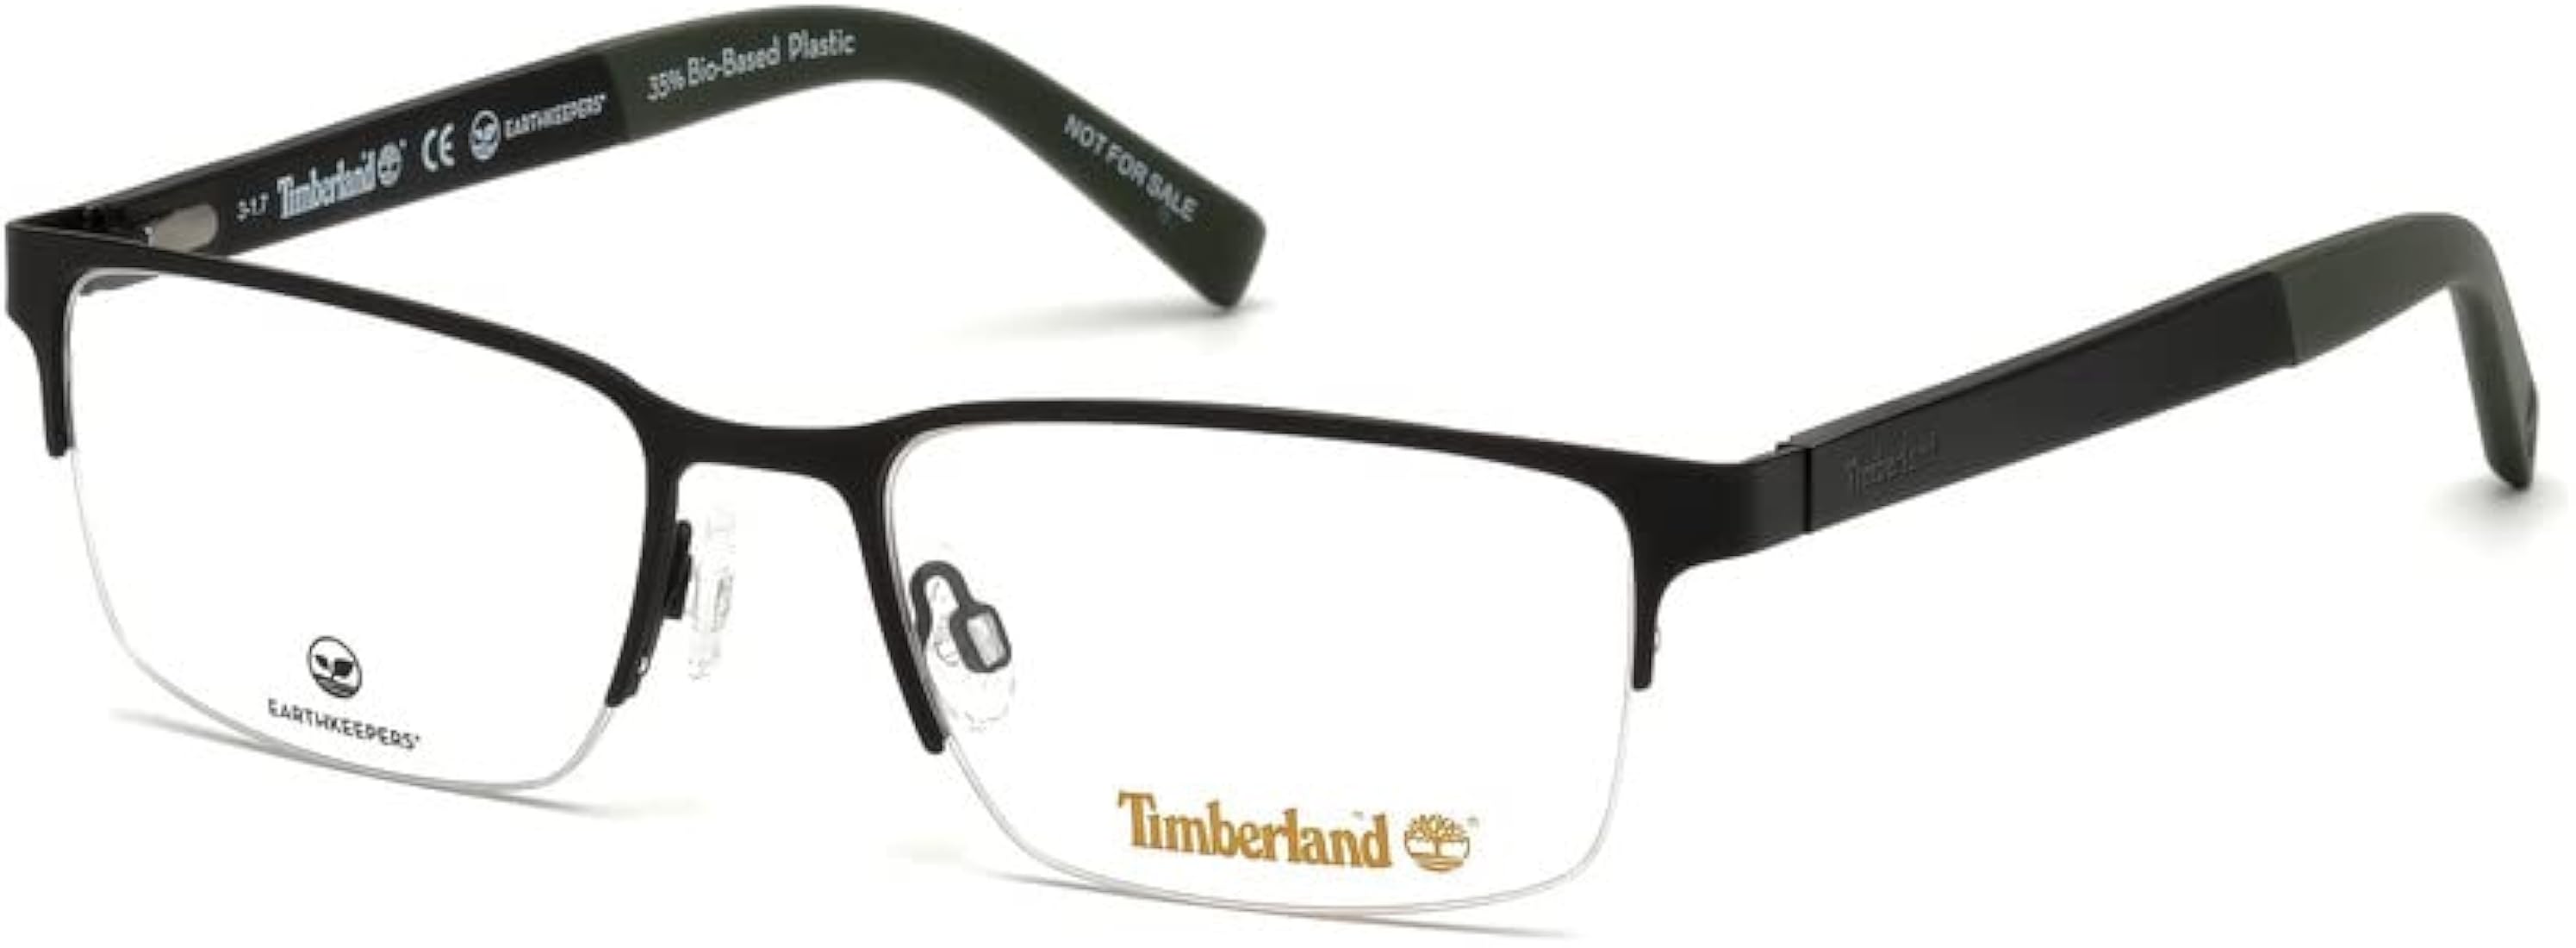 timberland optical frames